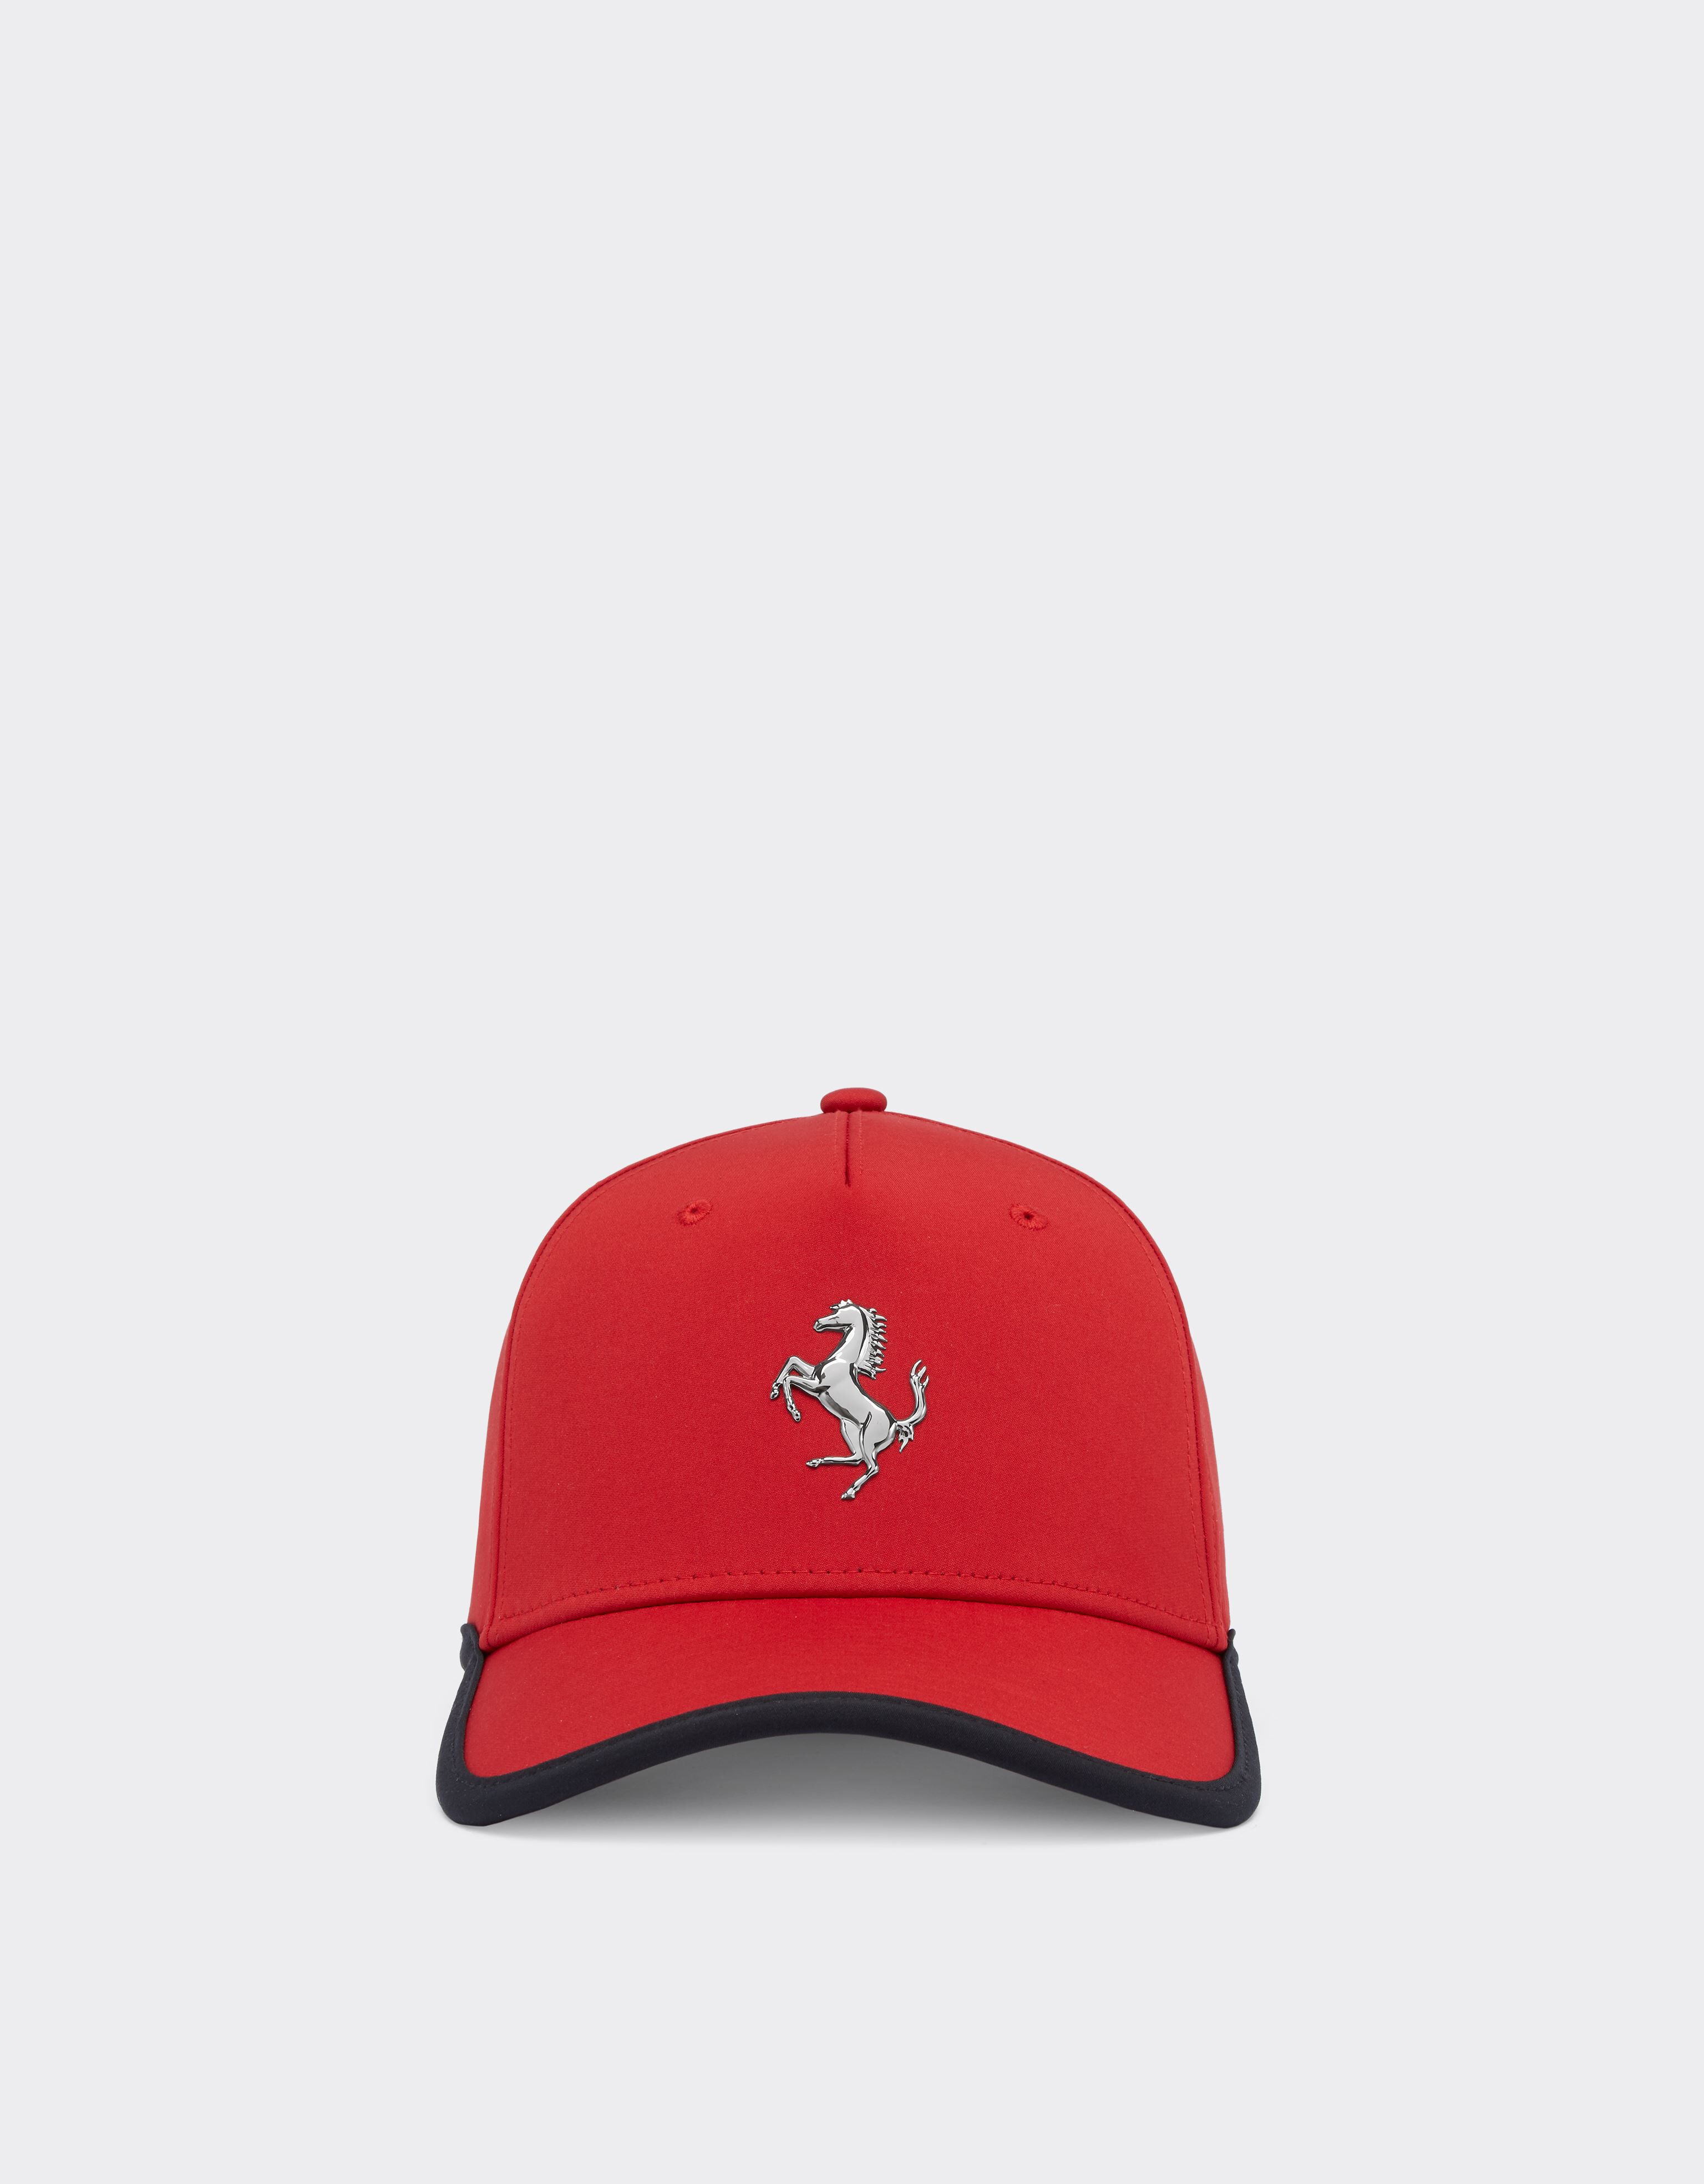 Ferrari Baseball cap with Prancing Horse detail Ingrid 21427f